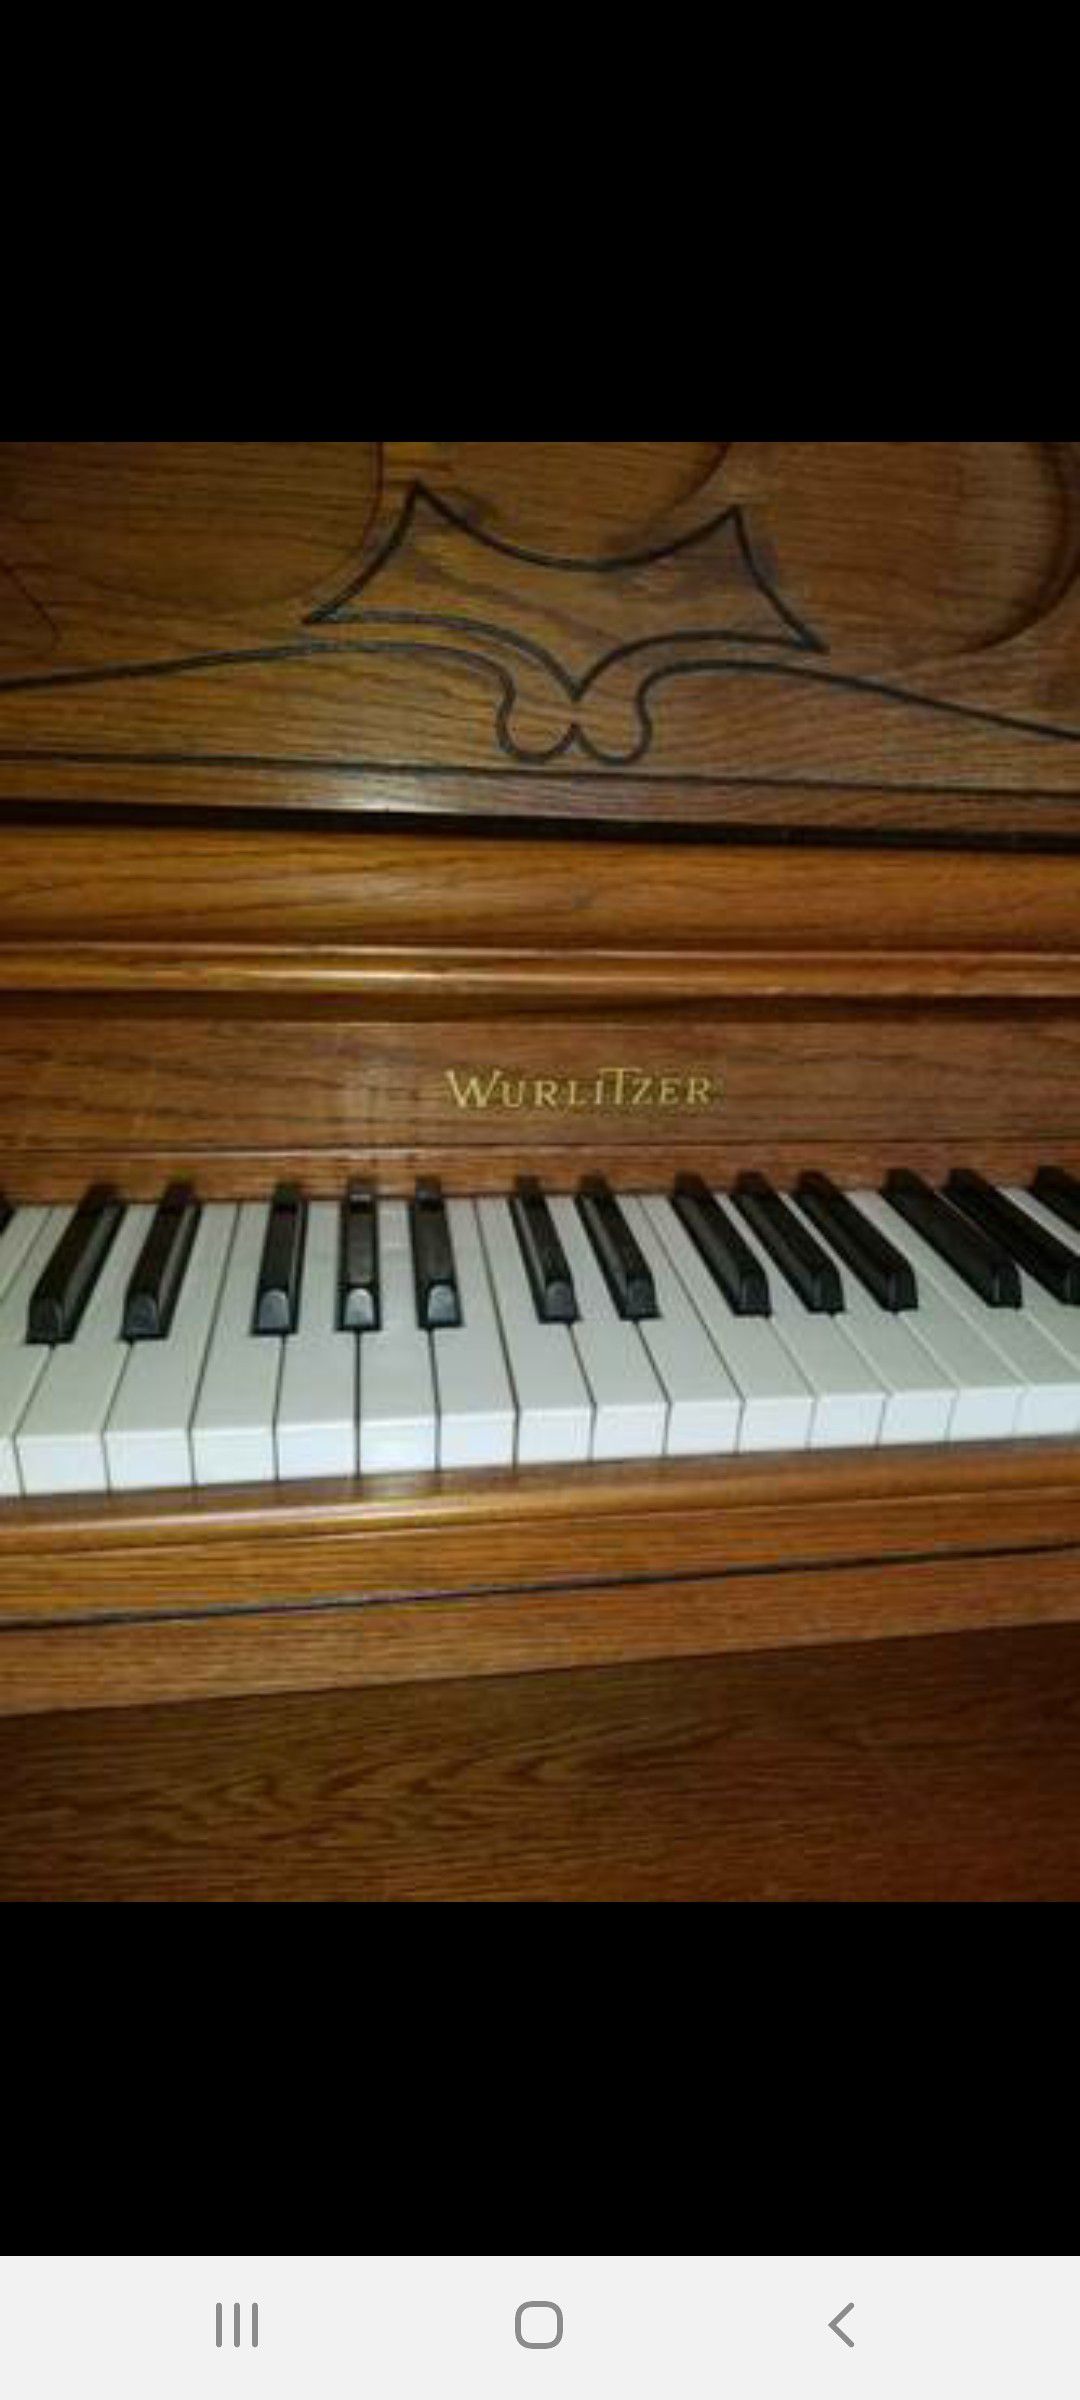 Wurlitzer Piano & Bench